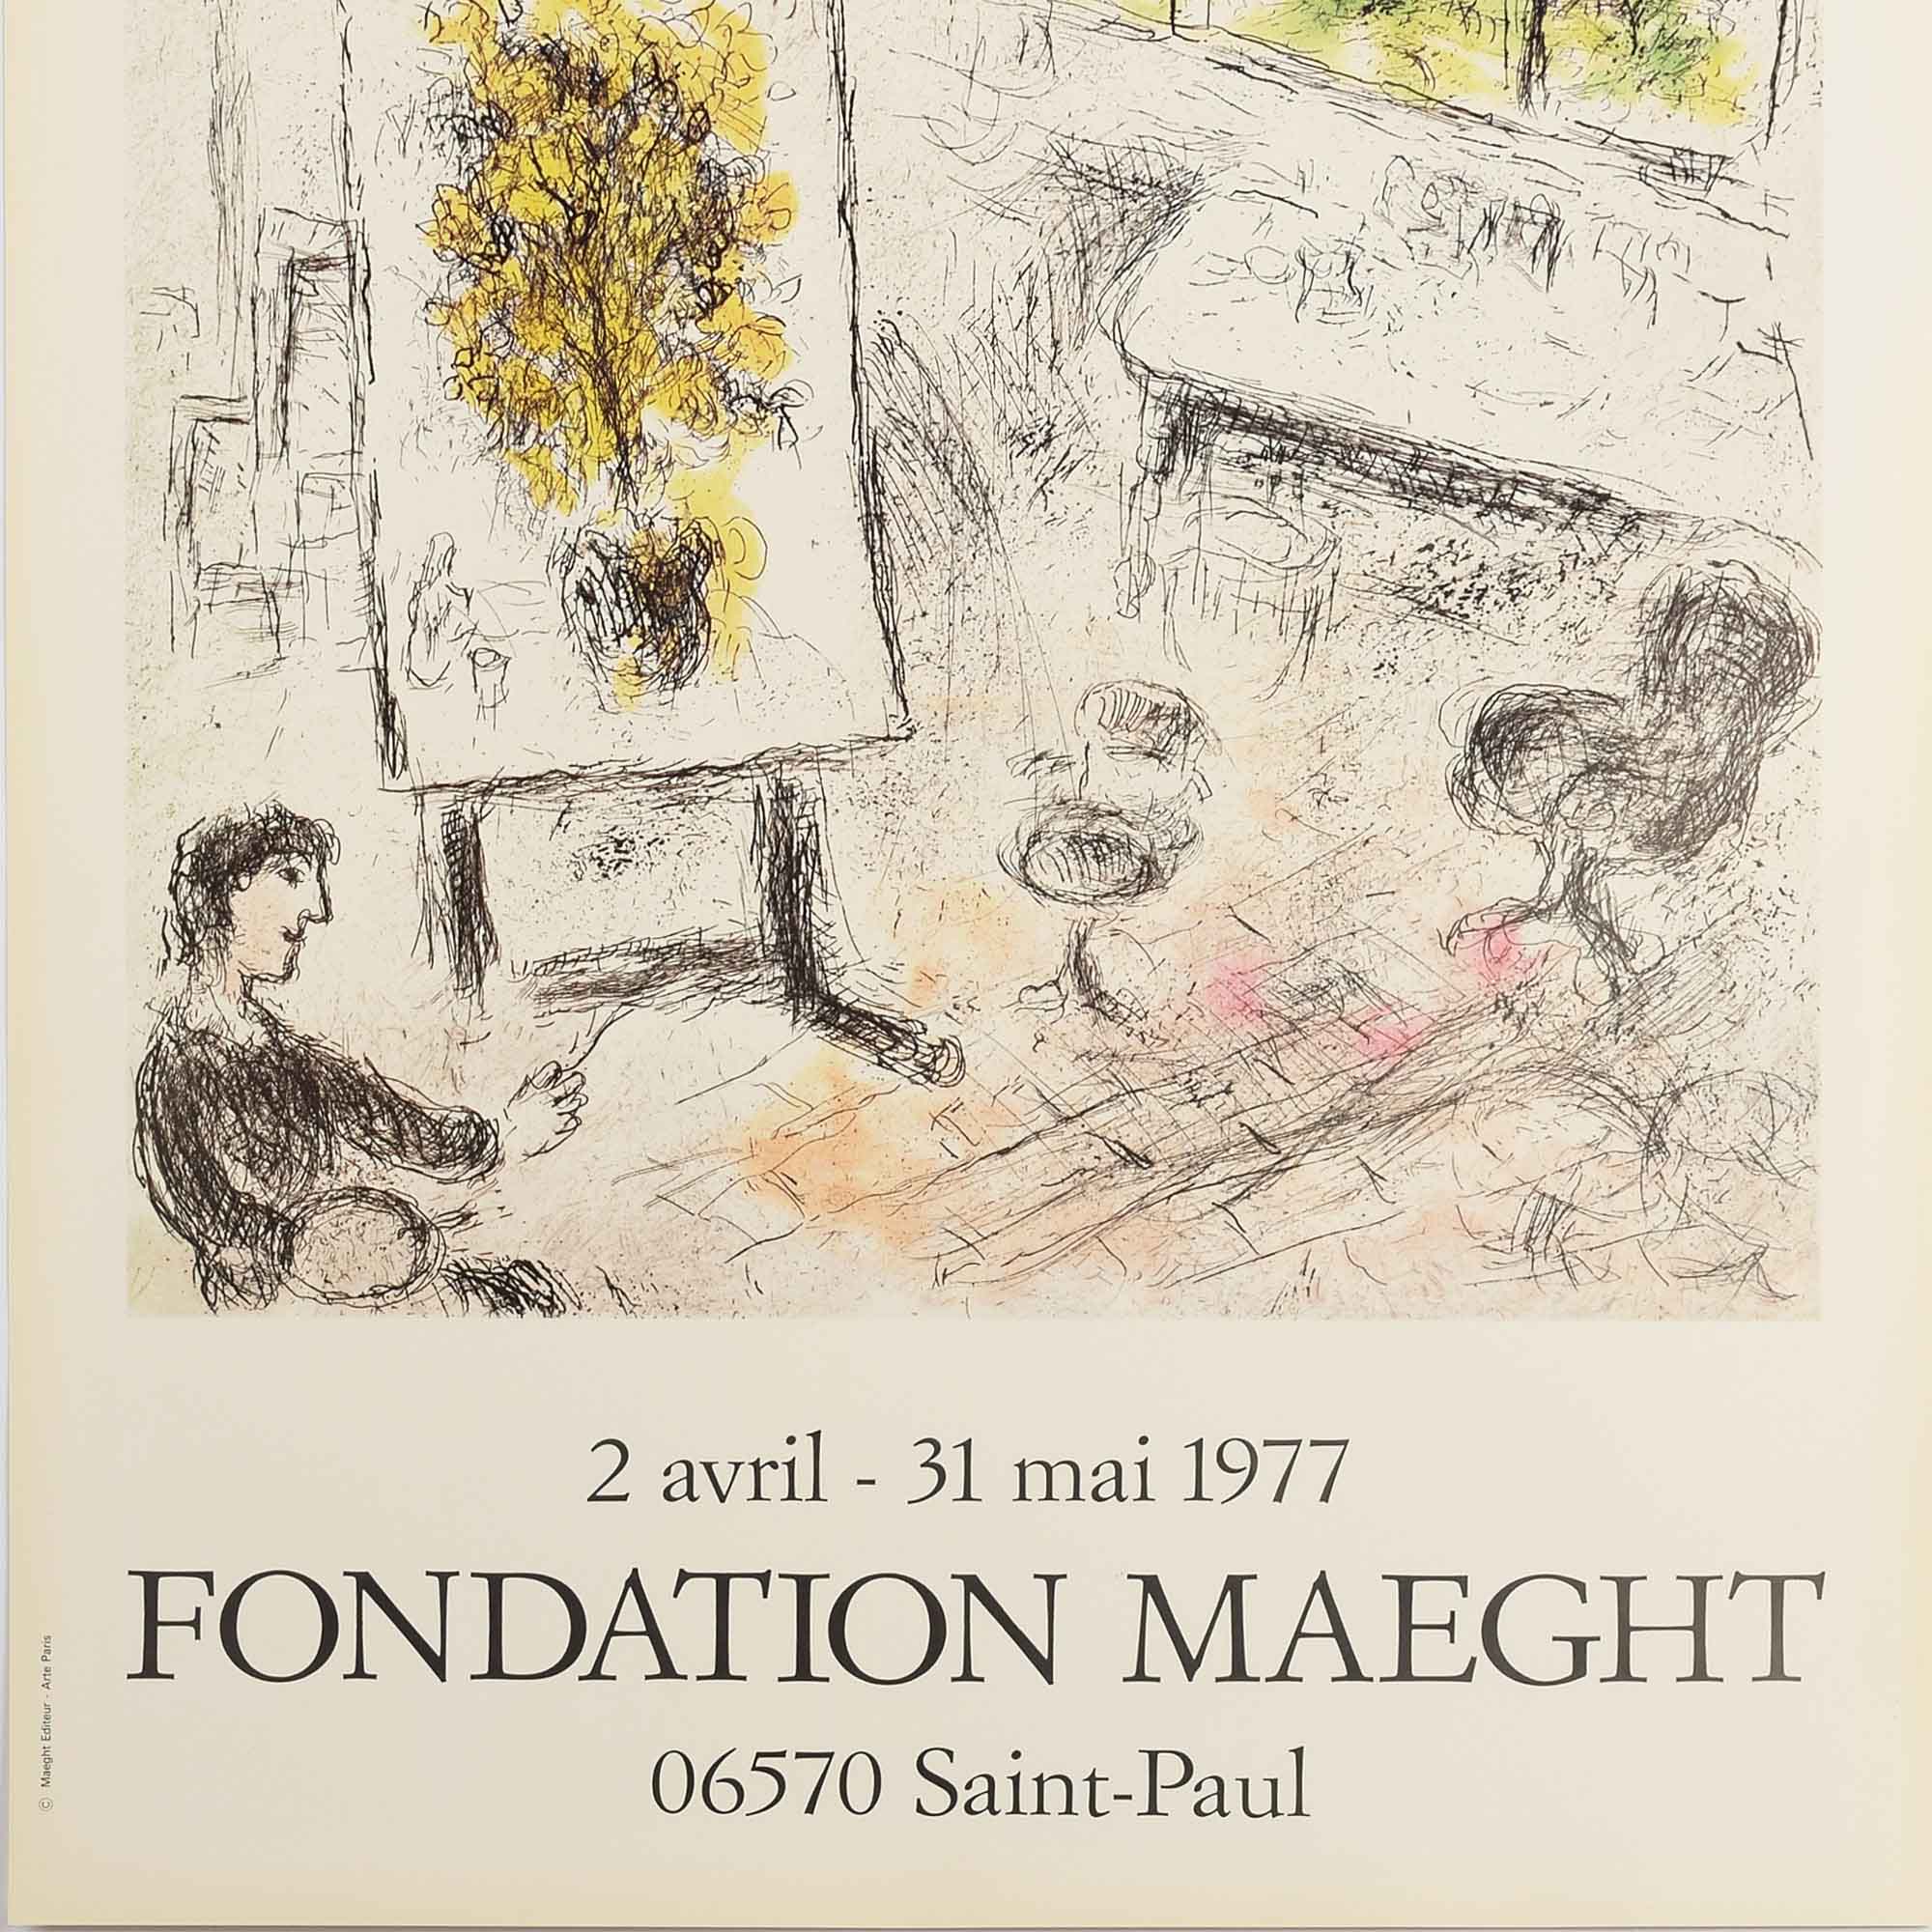 Chagall, Marc (1887 - 1985)